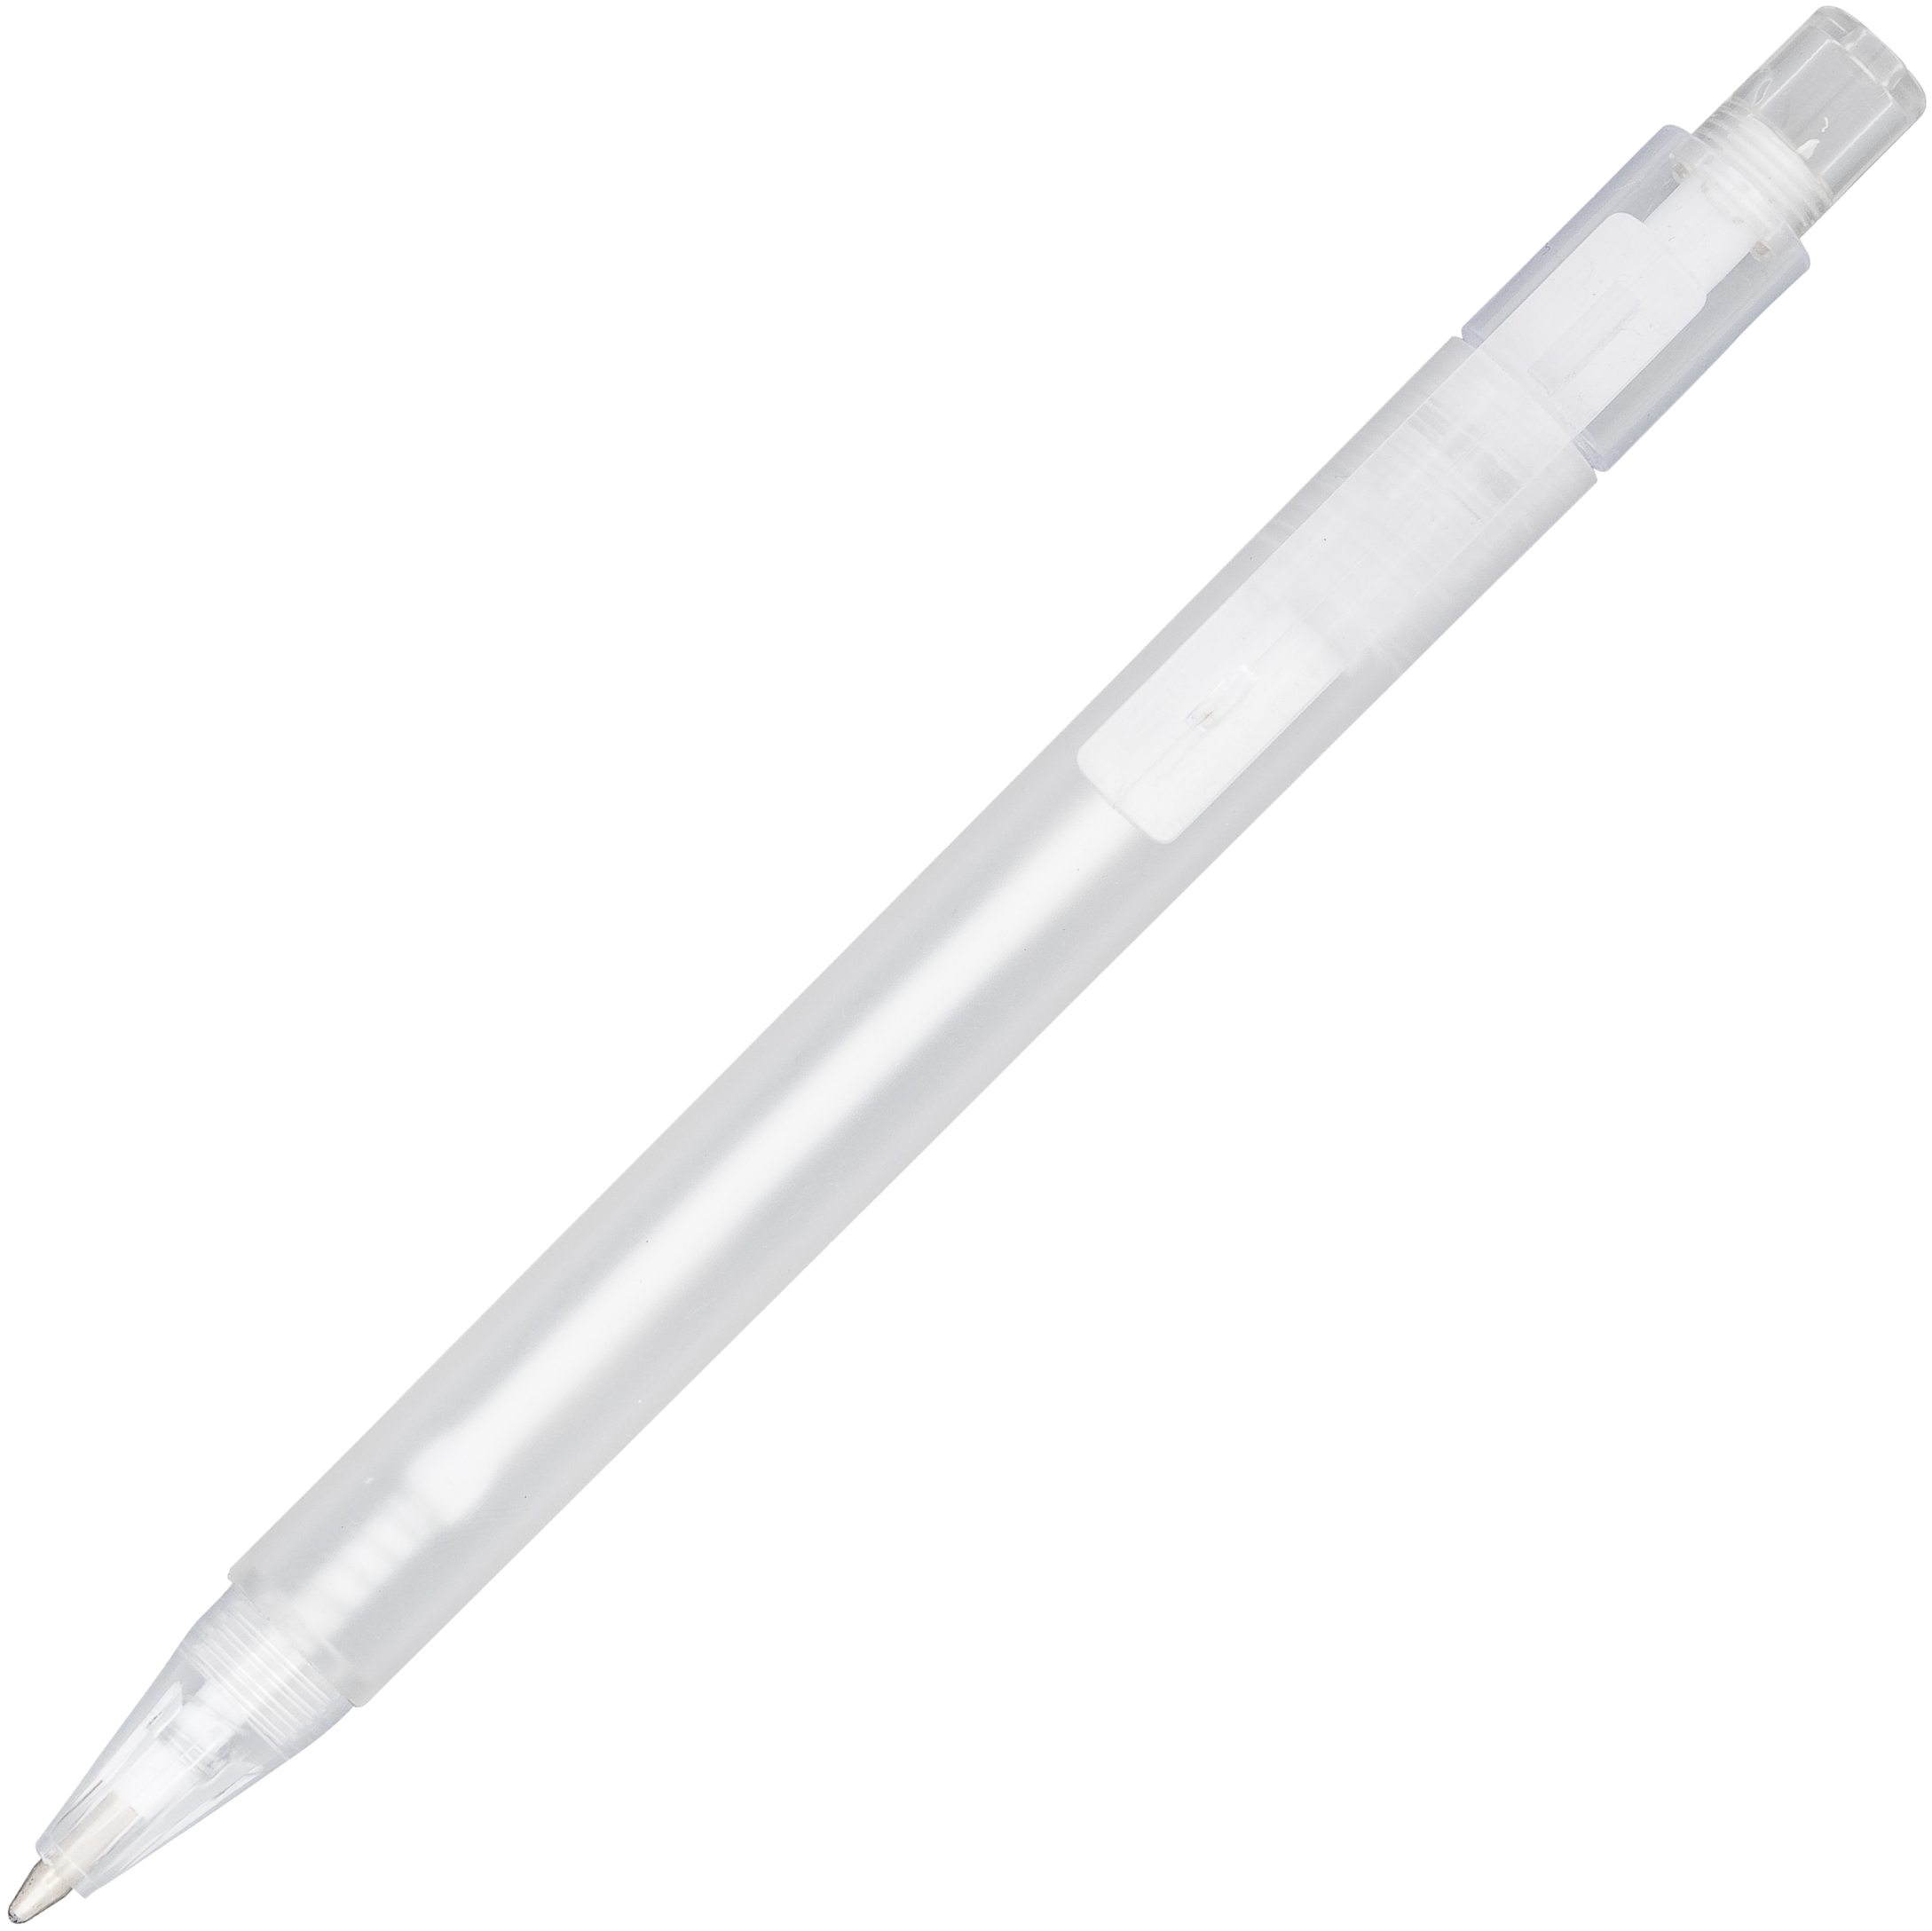 Calypso frosted ballpoint pen